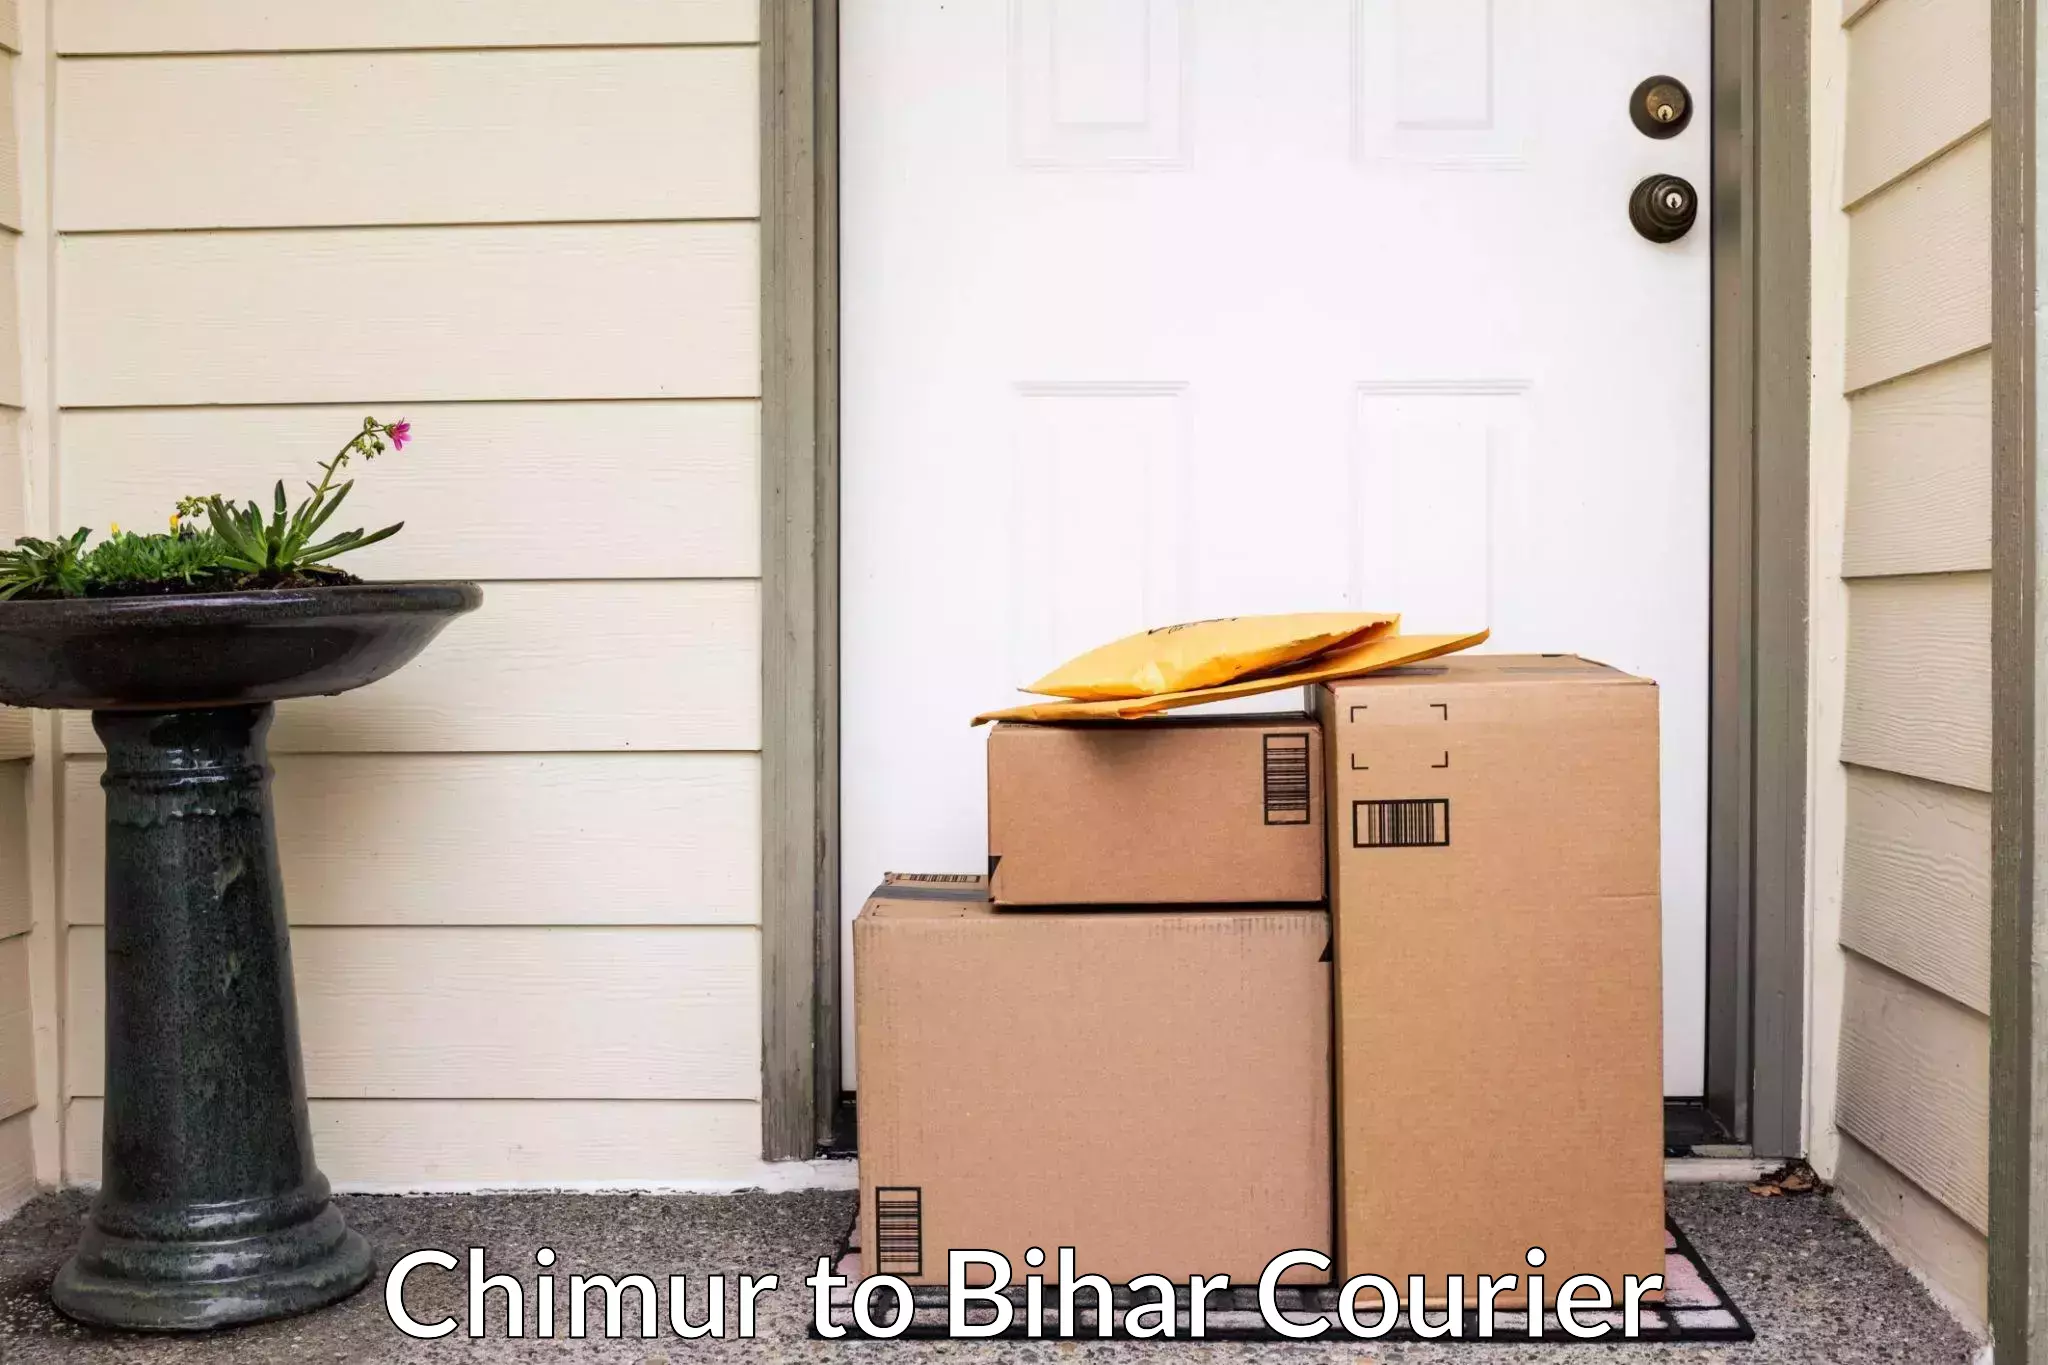 Professional moving company Chimur to Bihar